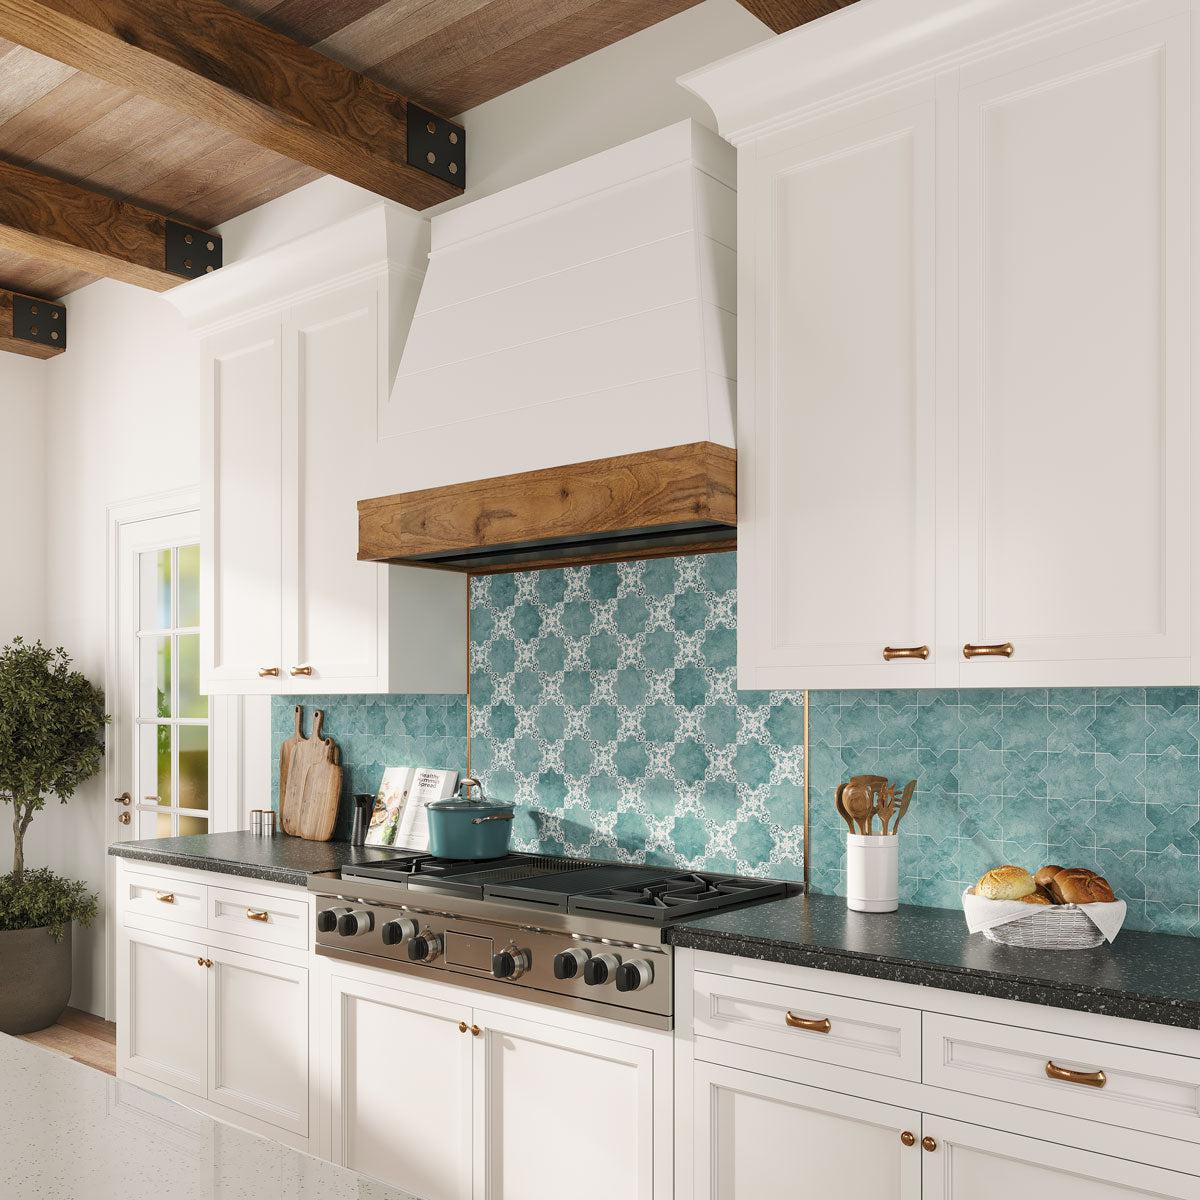 White kitchen cabinets with Santa Barbara Dappled Green Star and Decorative Cross backsplash